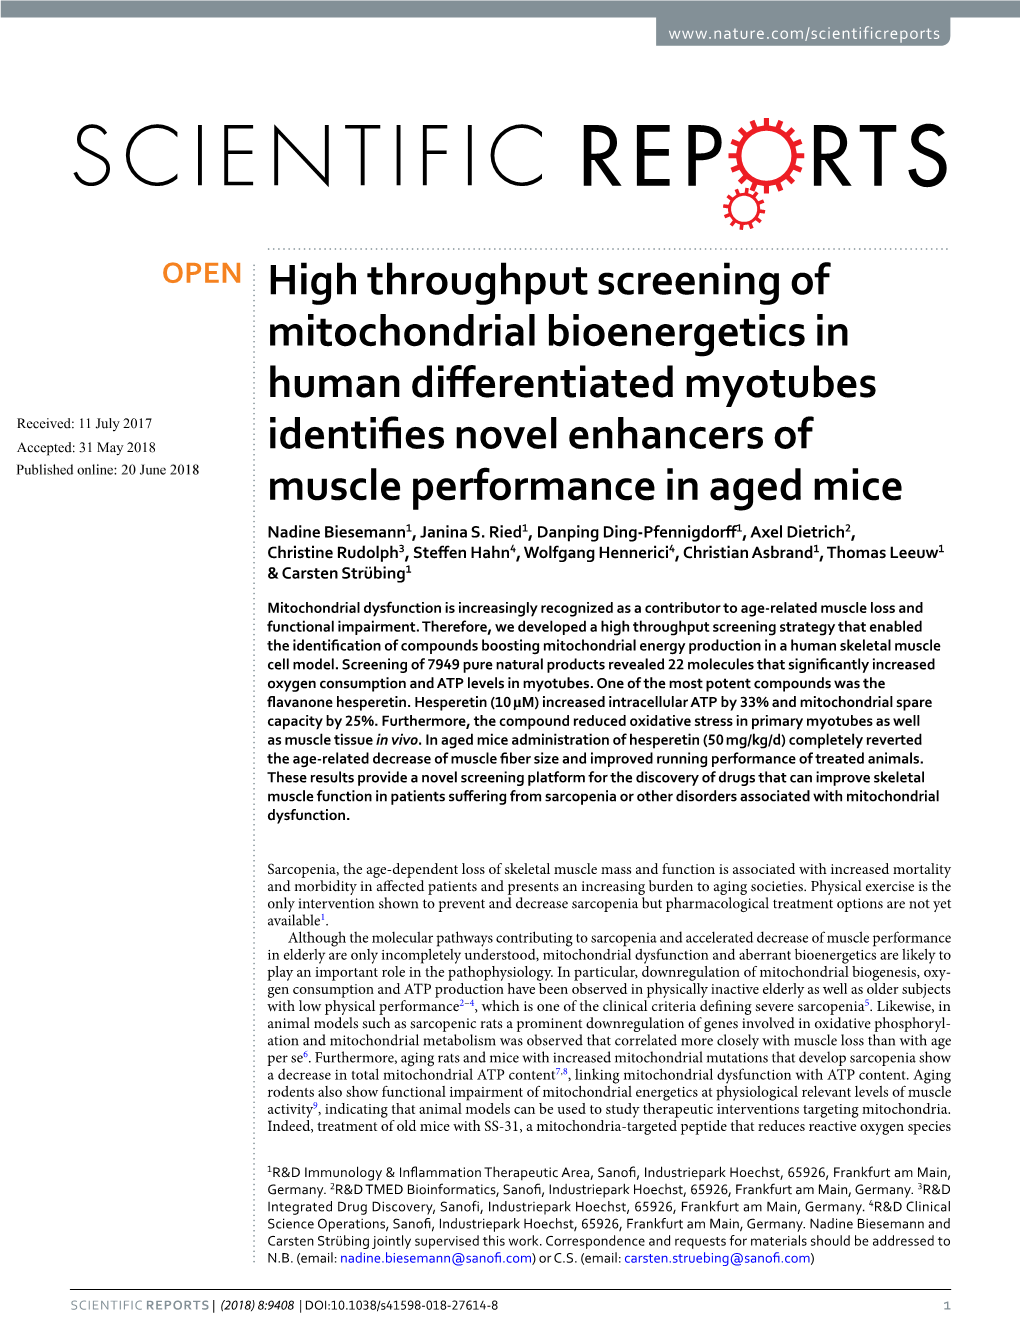 High Throughput Screening of Mitochondrial Bioenergetics in Human Differentiated Myotubes Identifies Novel Enhancers of Muscle P